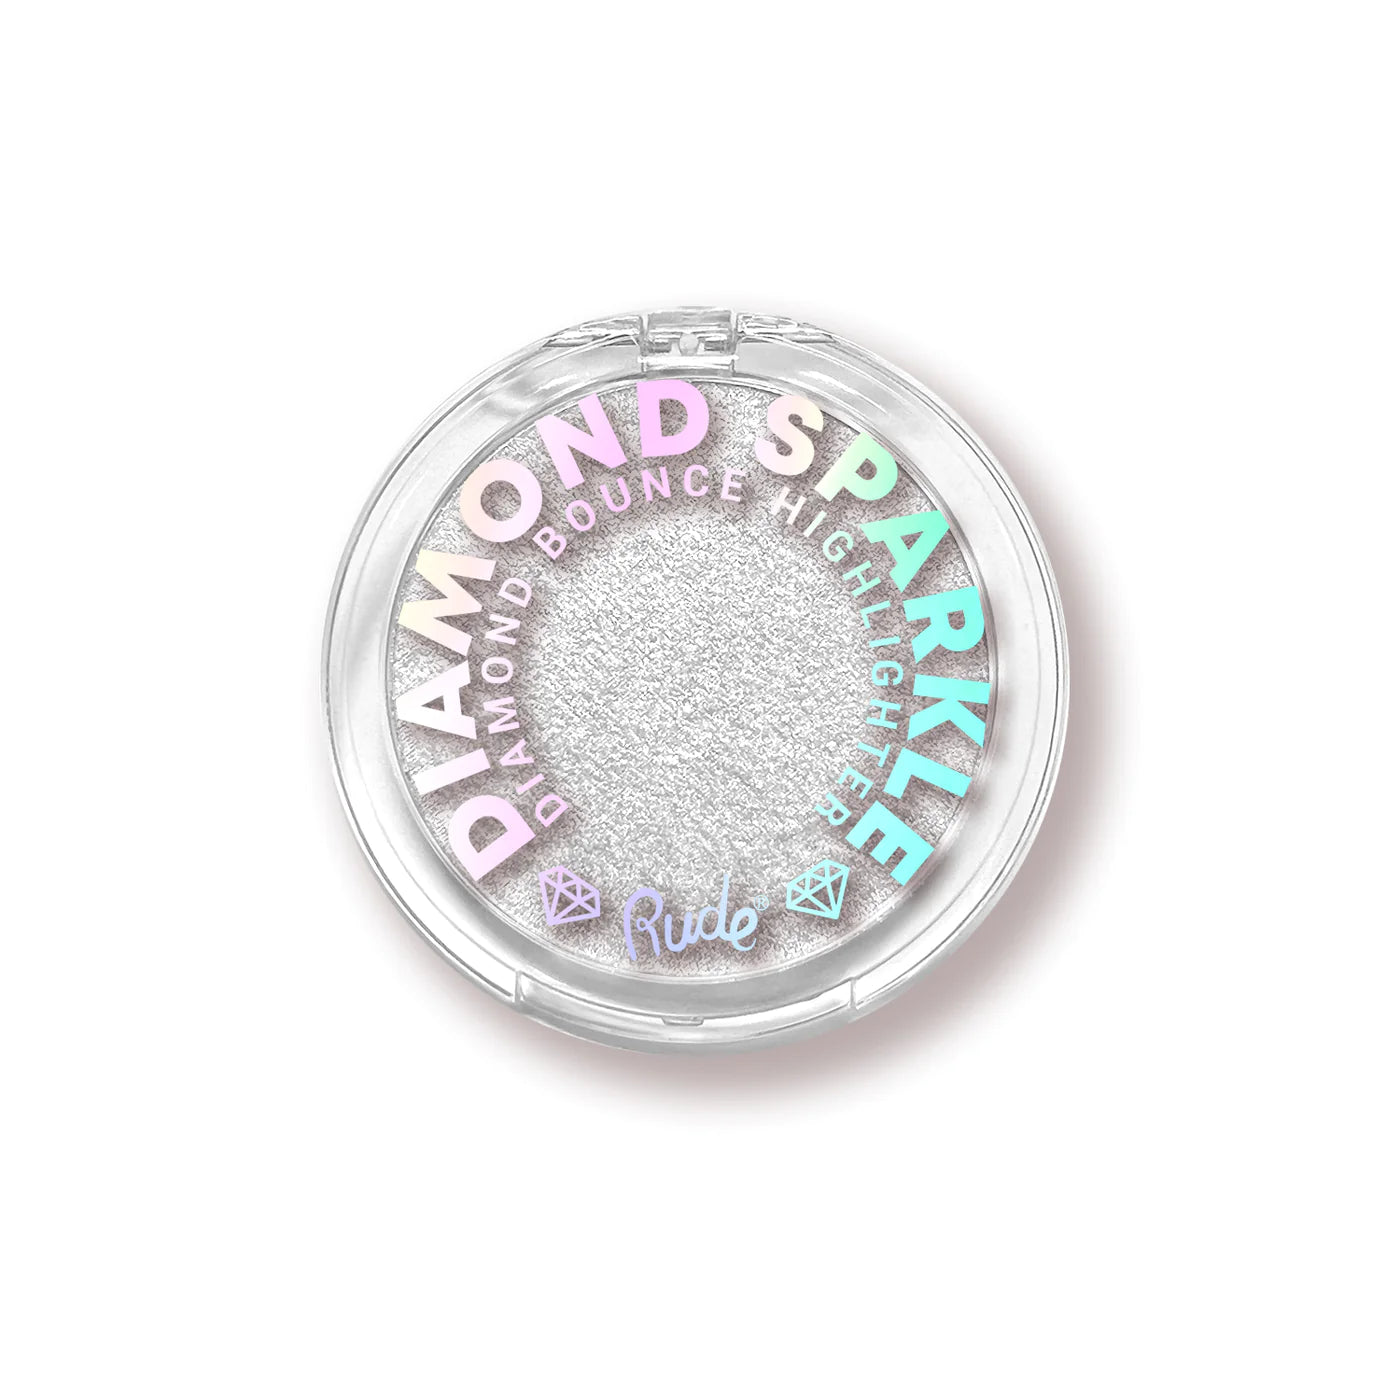 Pearl Diamond Sparkle